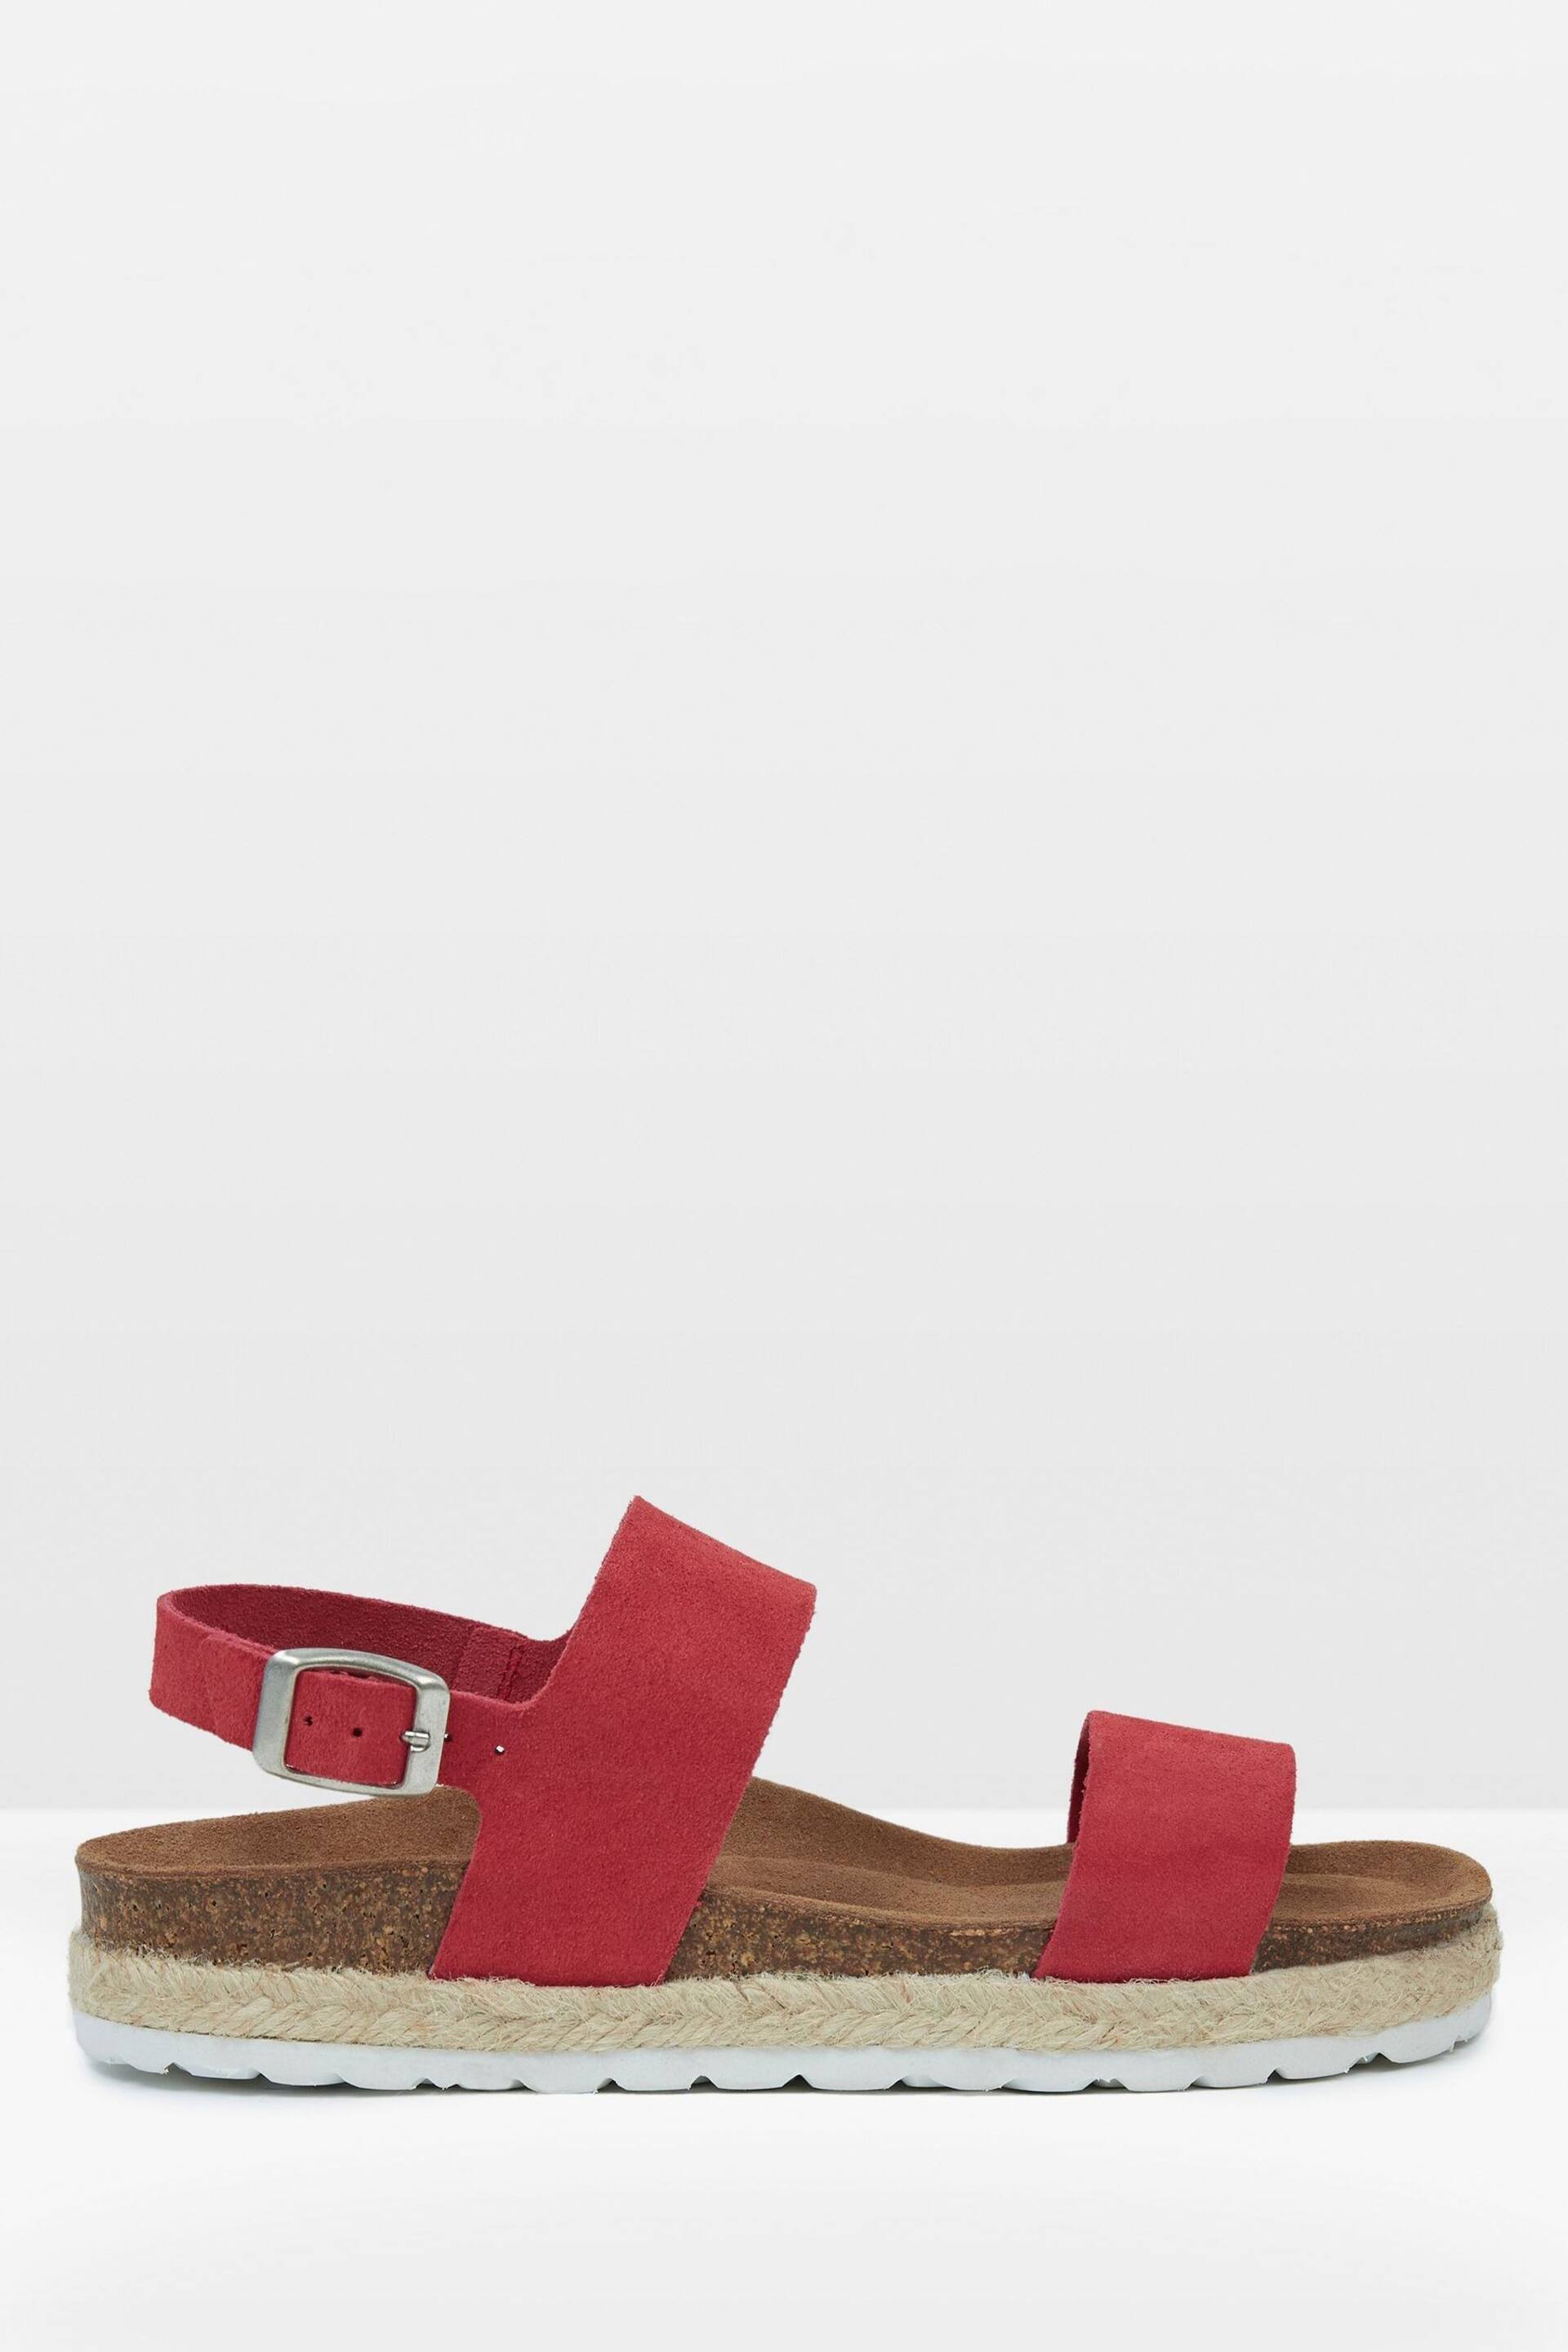 Celtic & Co. Red Multi Strap Sandals - Image 1 of 7